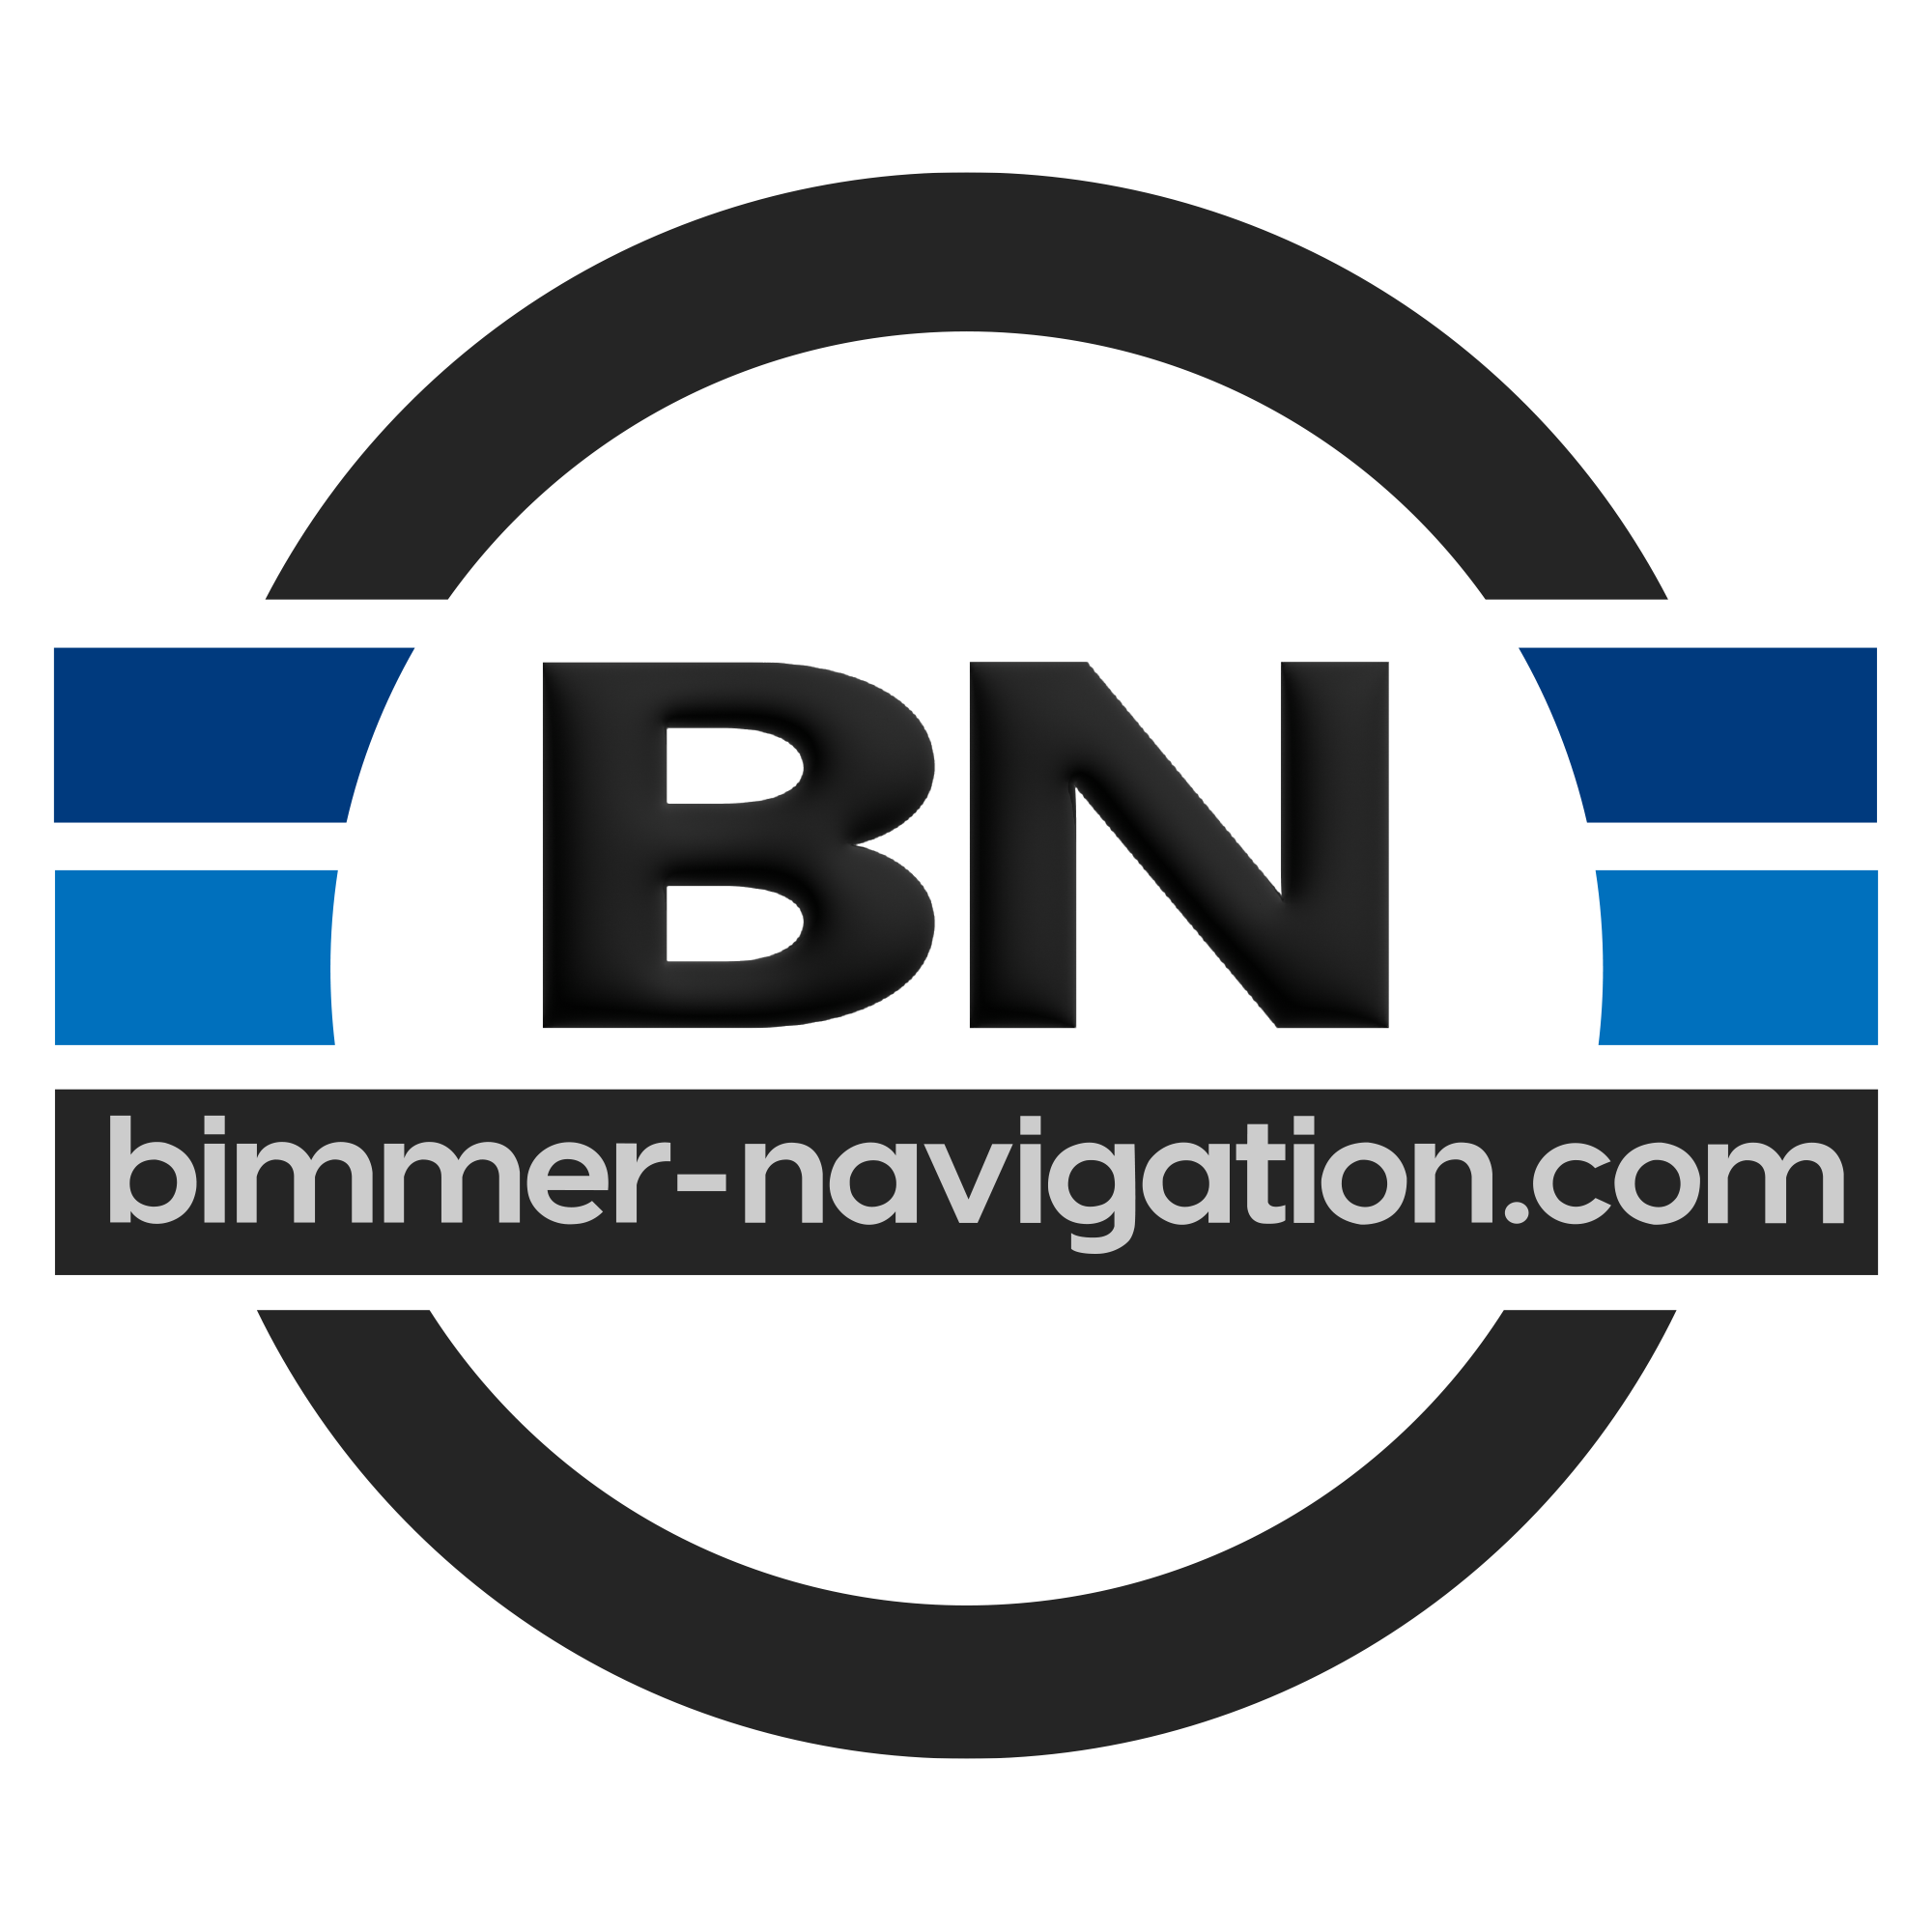 bimmer-navigation